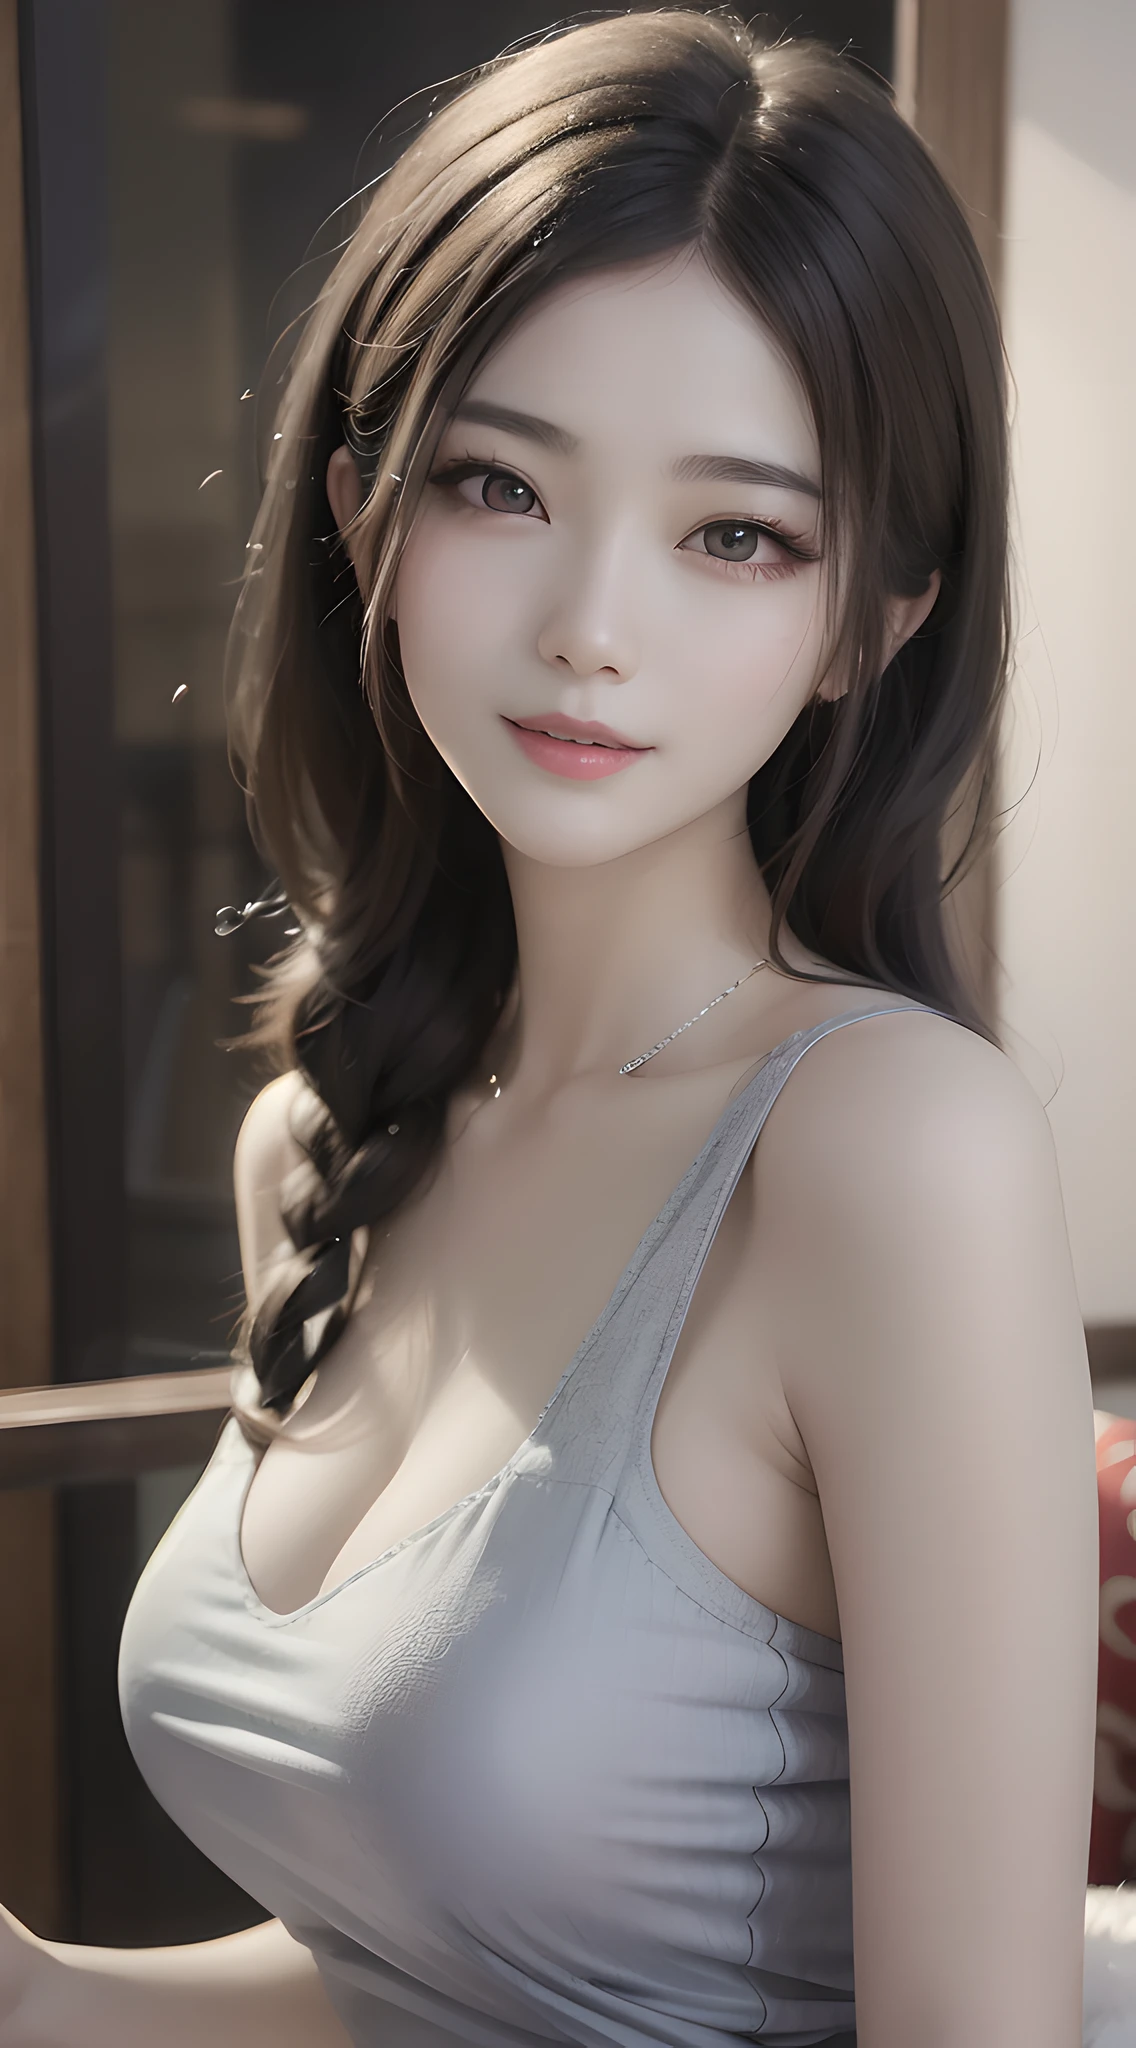 araffe 长发亚洲女性，身穿灰色背心, 漂亮的中国模特, 美麗的年輕韓國女人, 美麗的 亞洲 女孩, 可愛精緻的臉, 淡淡的乳白色瓷肌, 友善迷人的微笑, 美麗的韓國女人, 可愛迷人的笑容, 美麗的年輕韓國女人, 韓國女孩, 日本女神, 美麗柔和的燈光, 高瘦的美麗女神